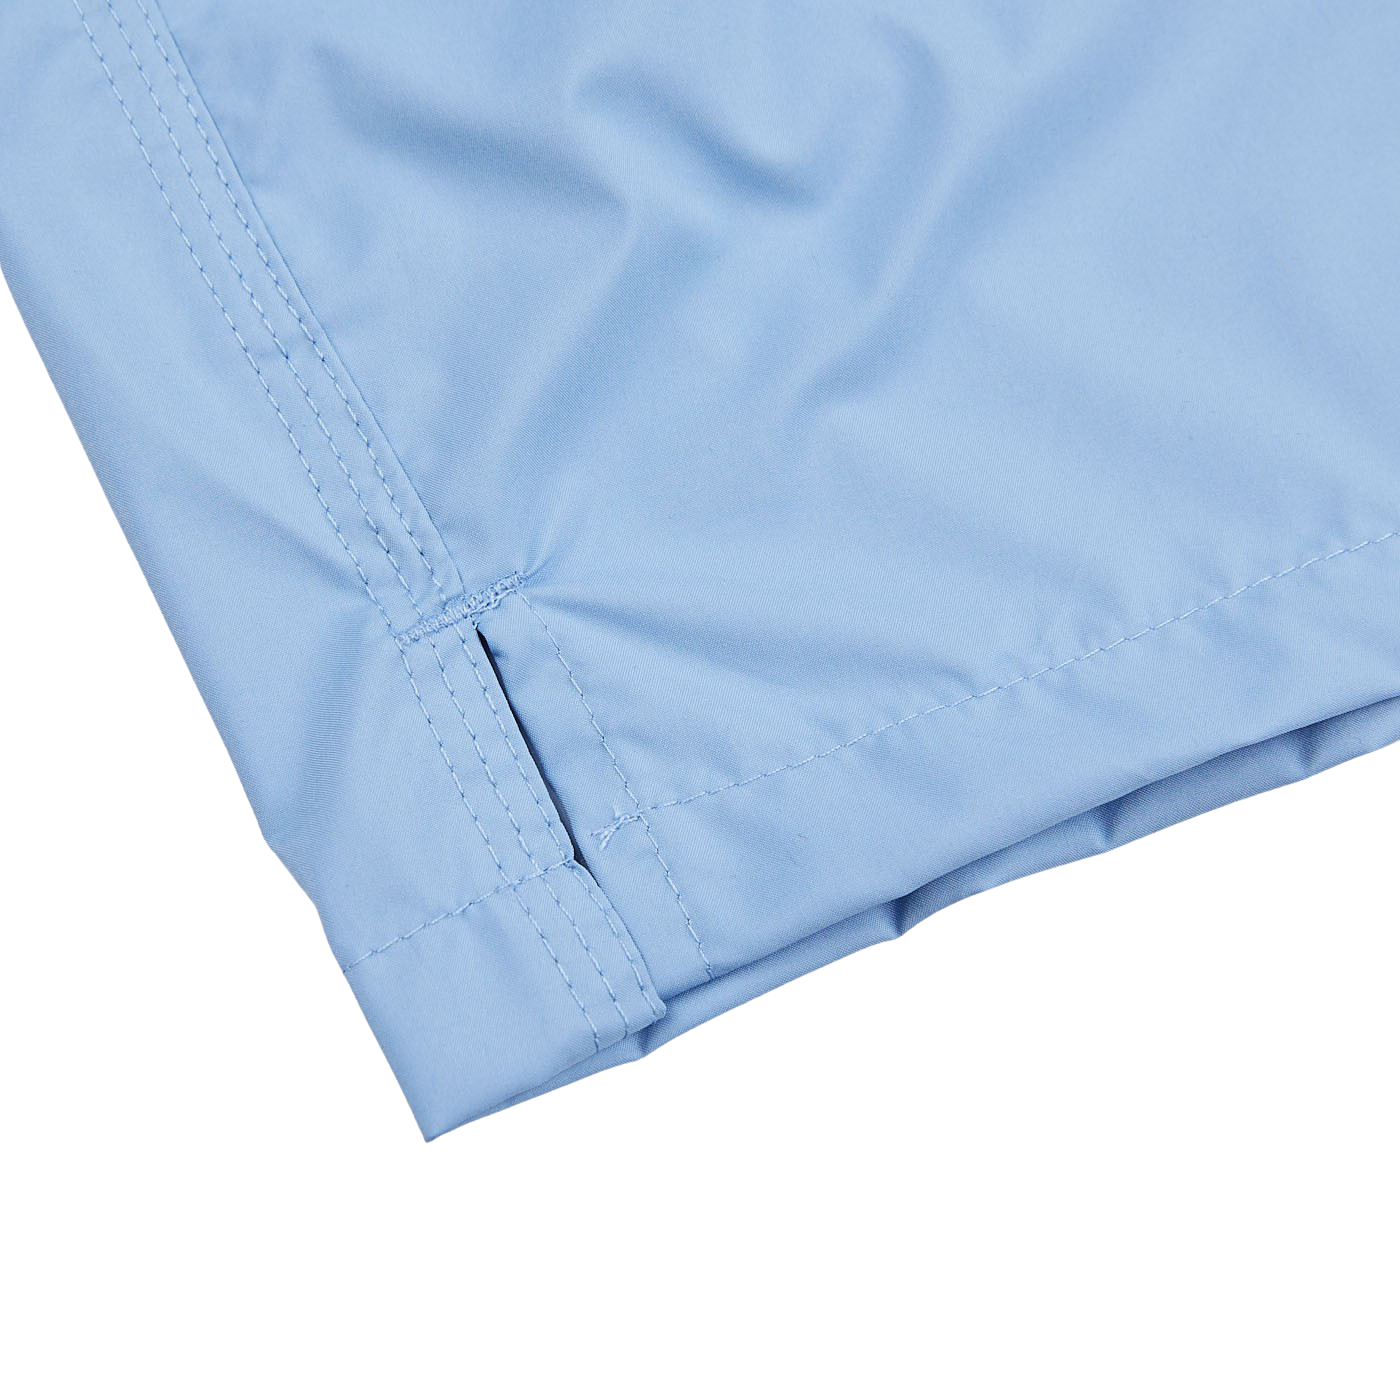 An up-close view of Fedeli Light Blue Microfiber Madeira Swim Shorts with a zipper.